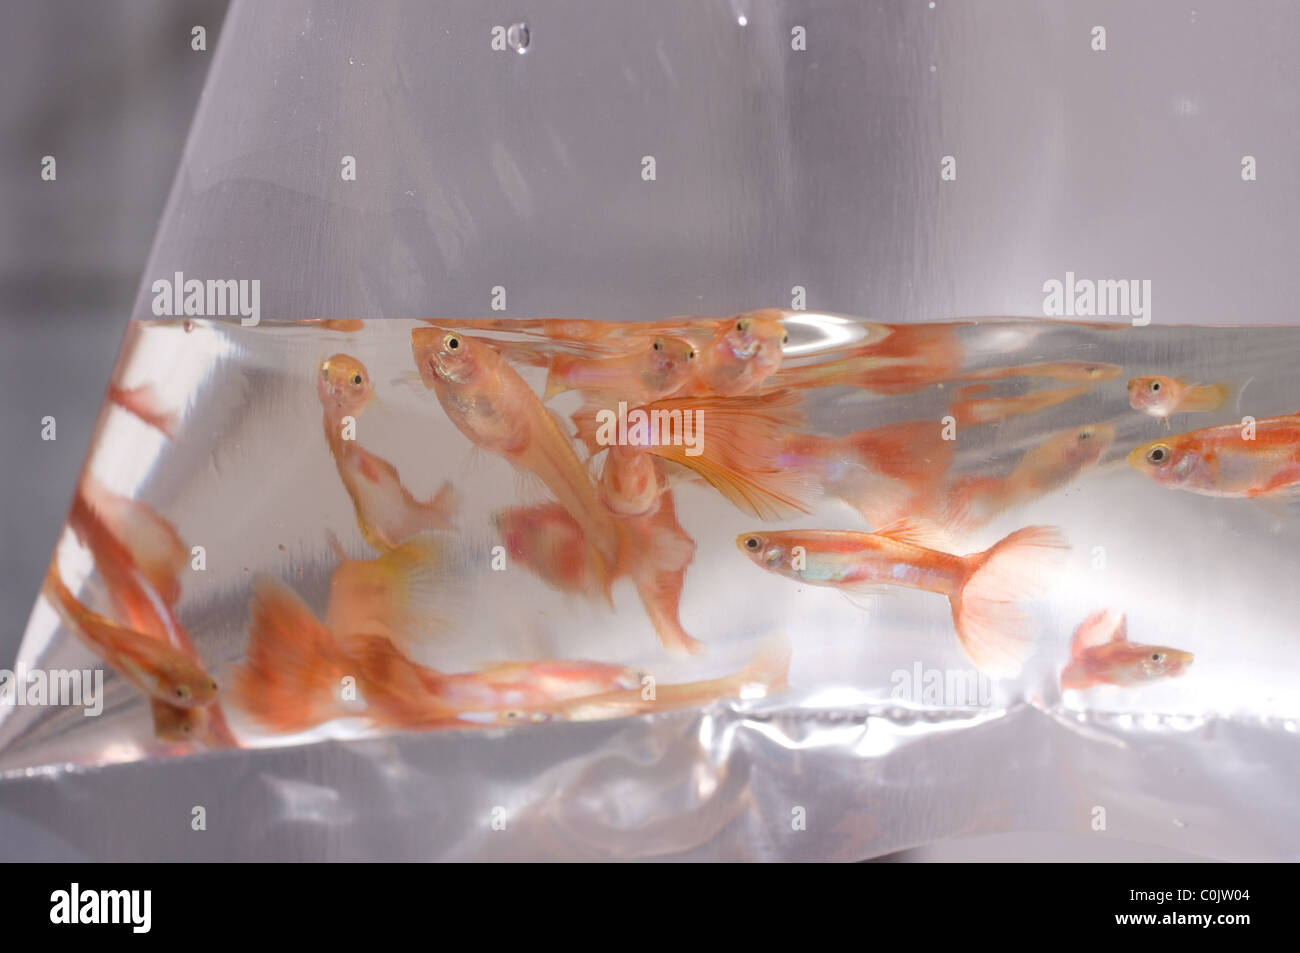 Young guppy fish (Poecilia reticulata) inside a plastic bag Stock Photo